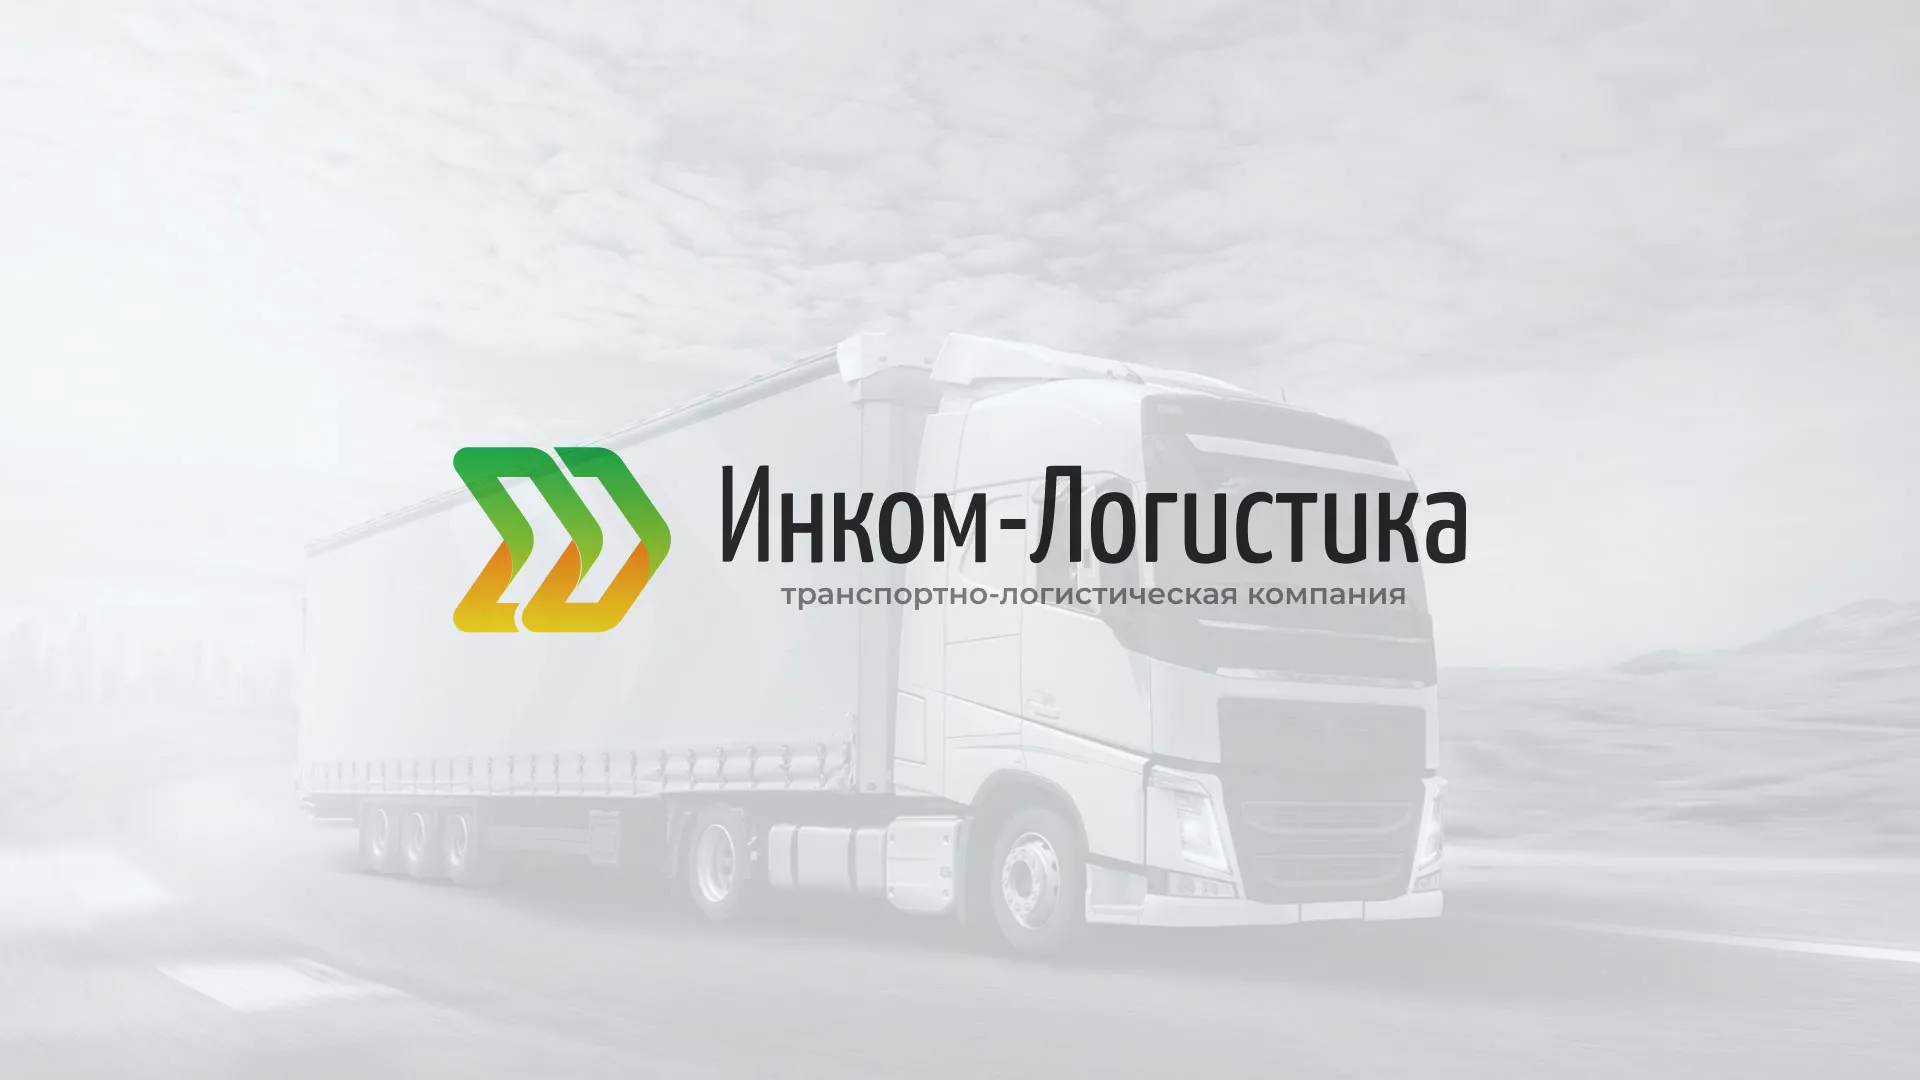 Разработка логотипа и сайта компании «Инком-Логистика» в Верещагино